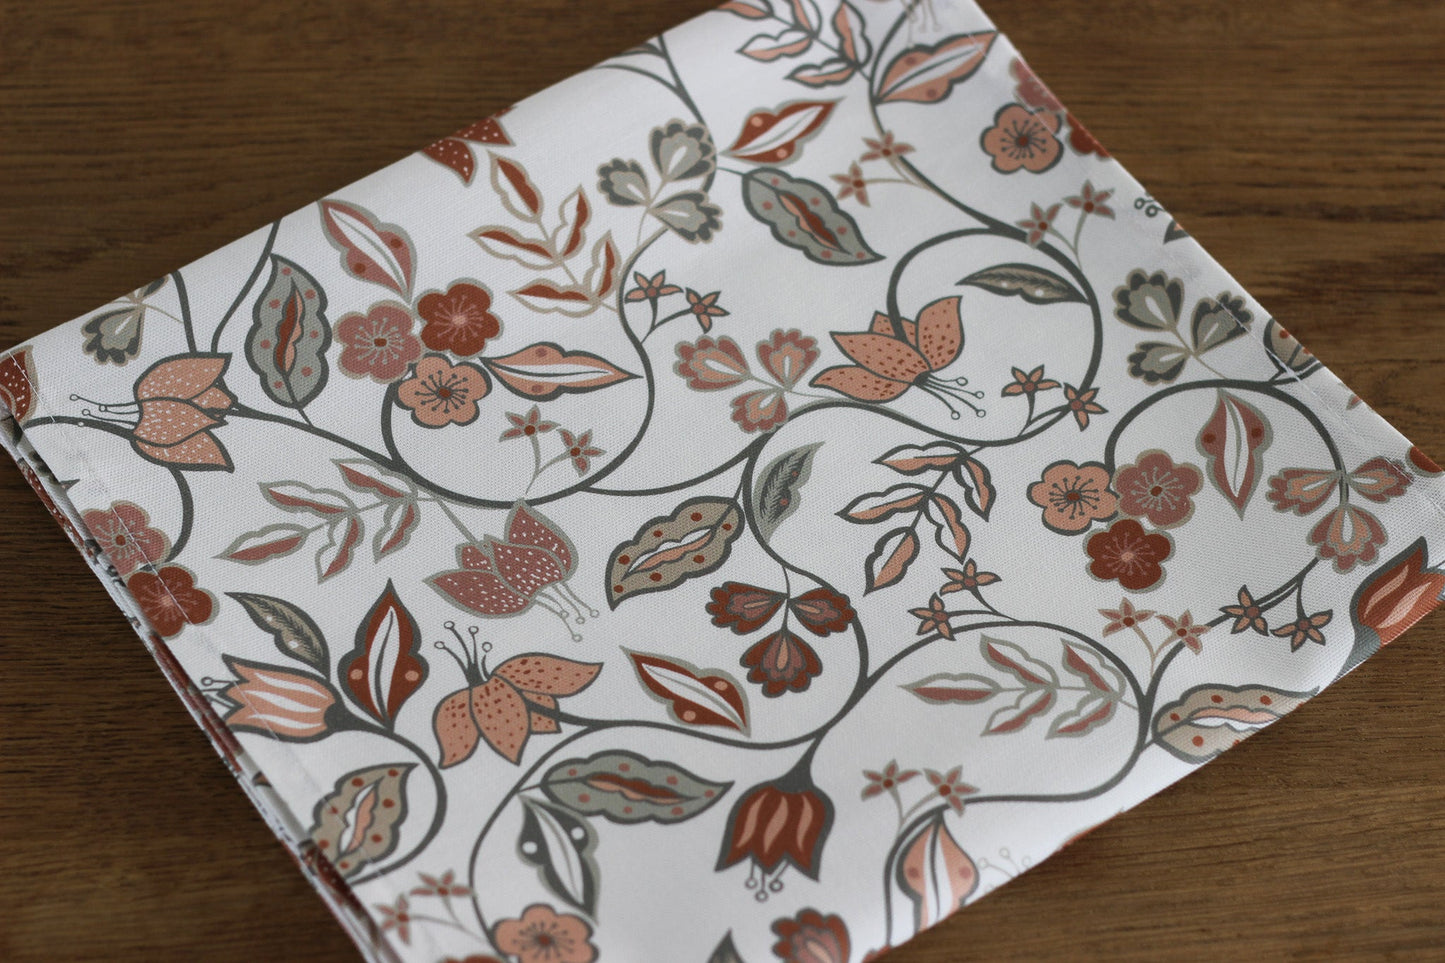 Vintage Floral Tablecloth - Rust